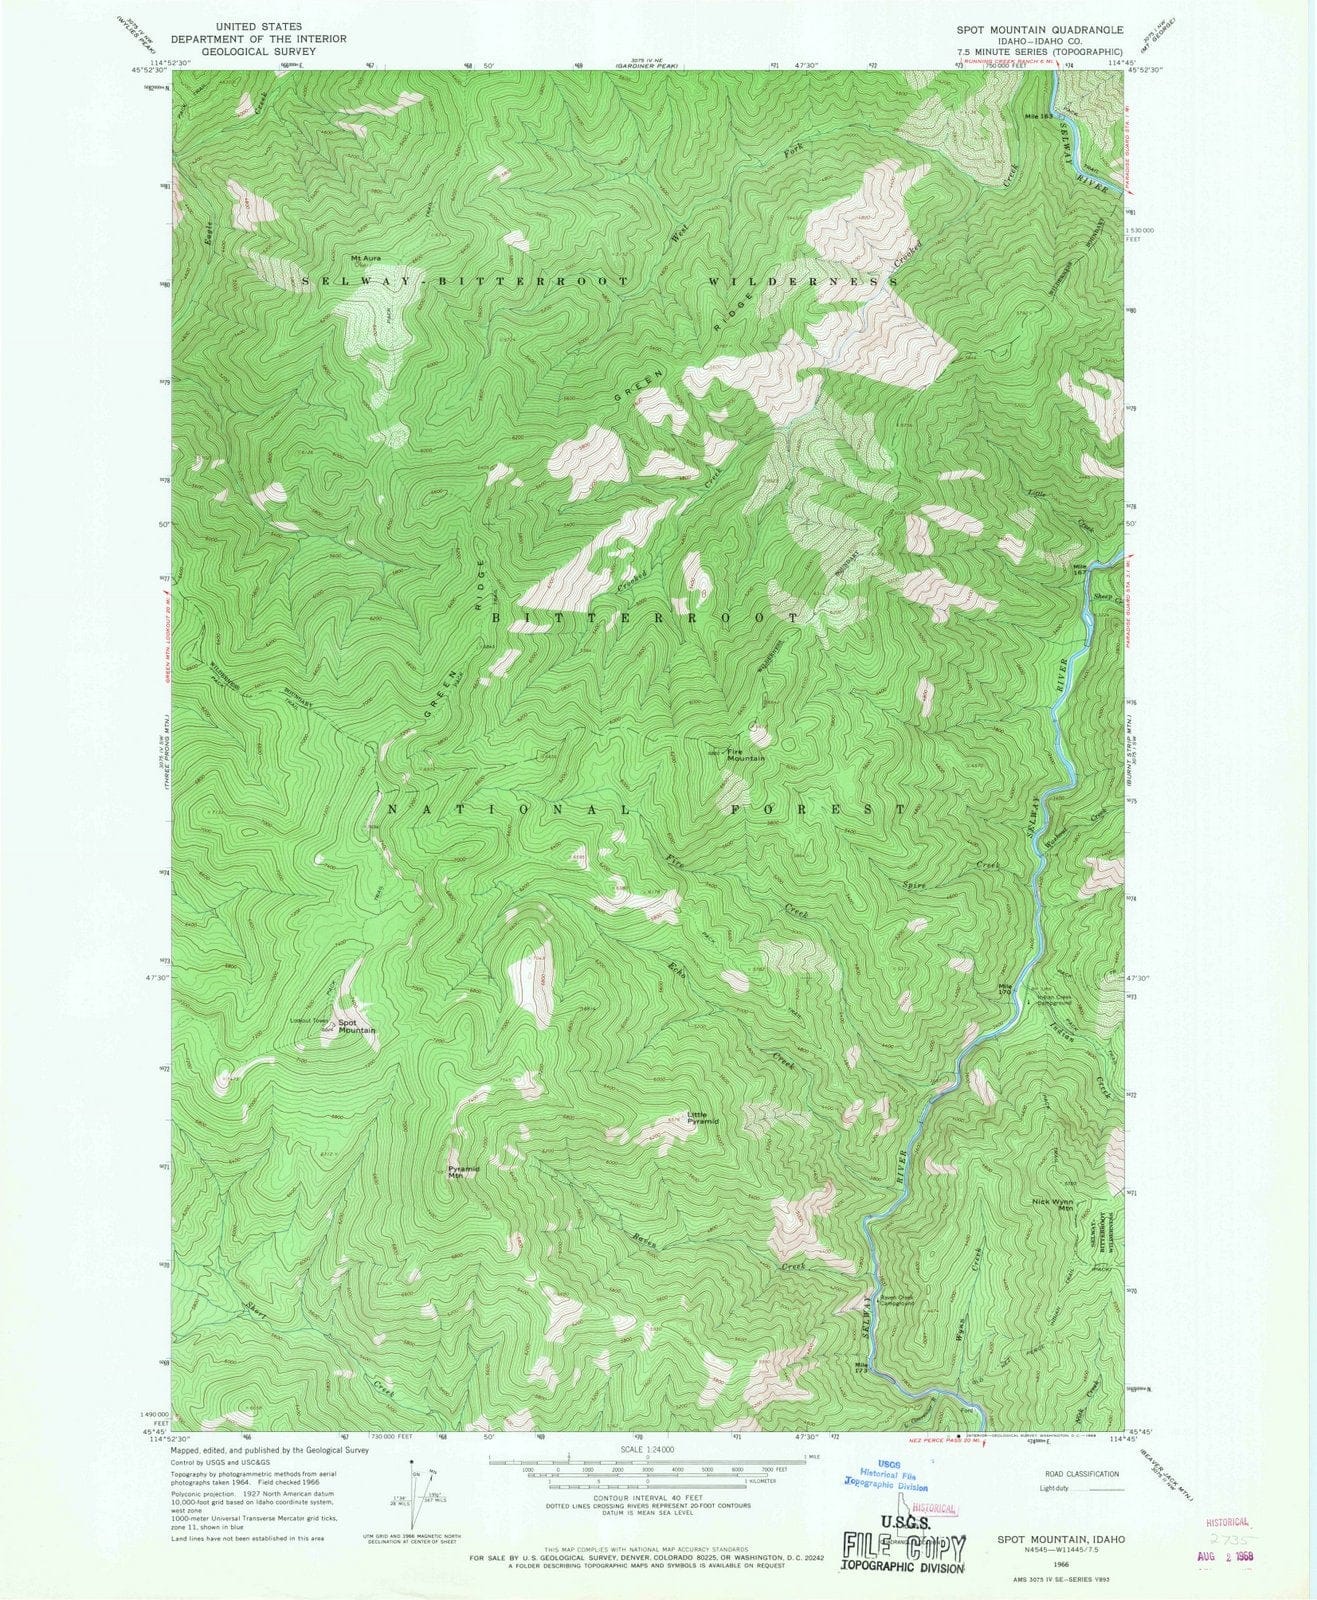 1966 Spot Mountain, ID - Idaho - USGS Topographic Map